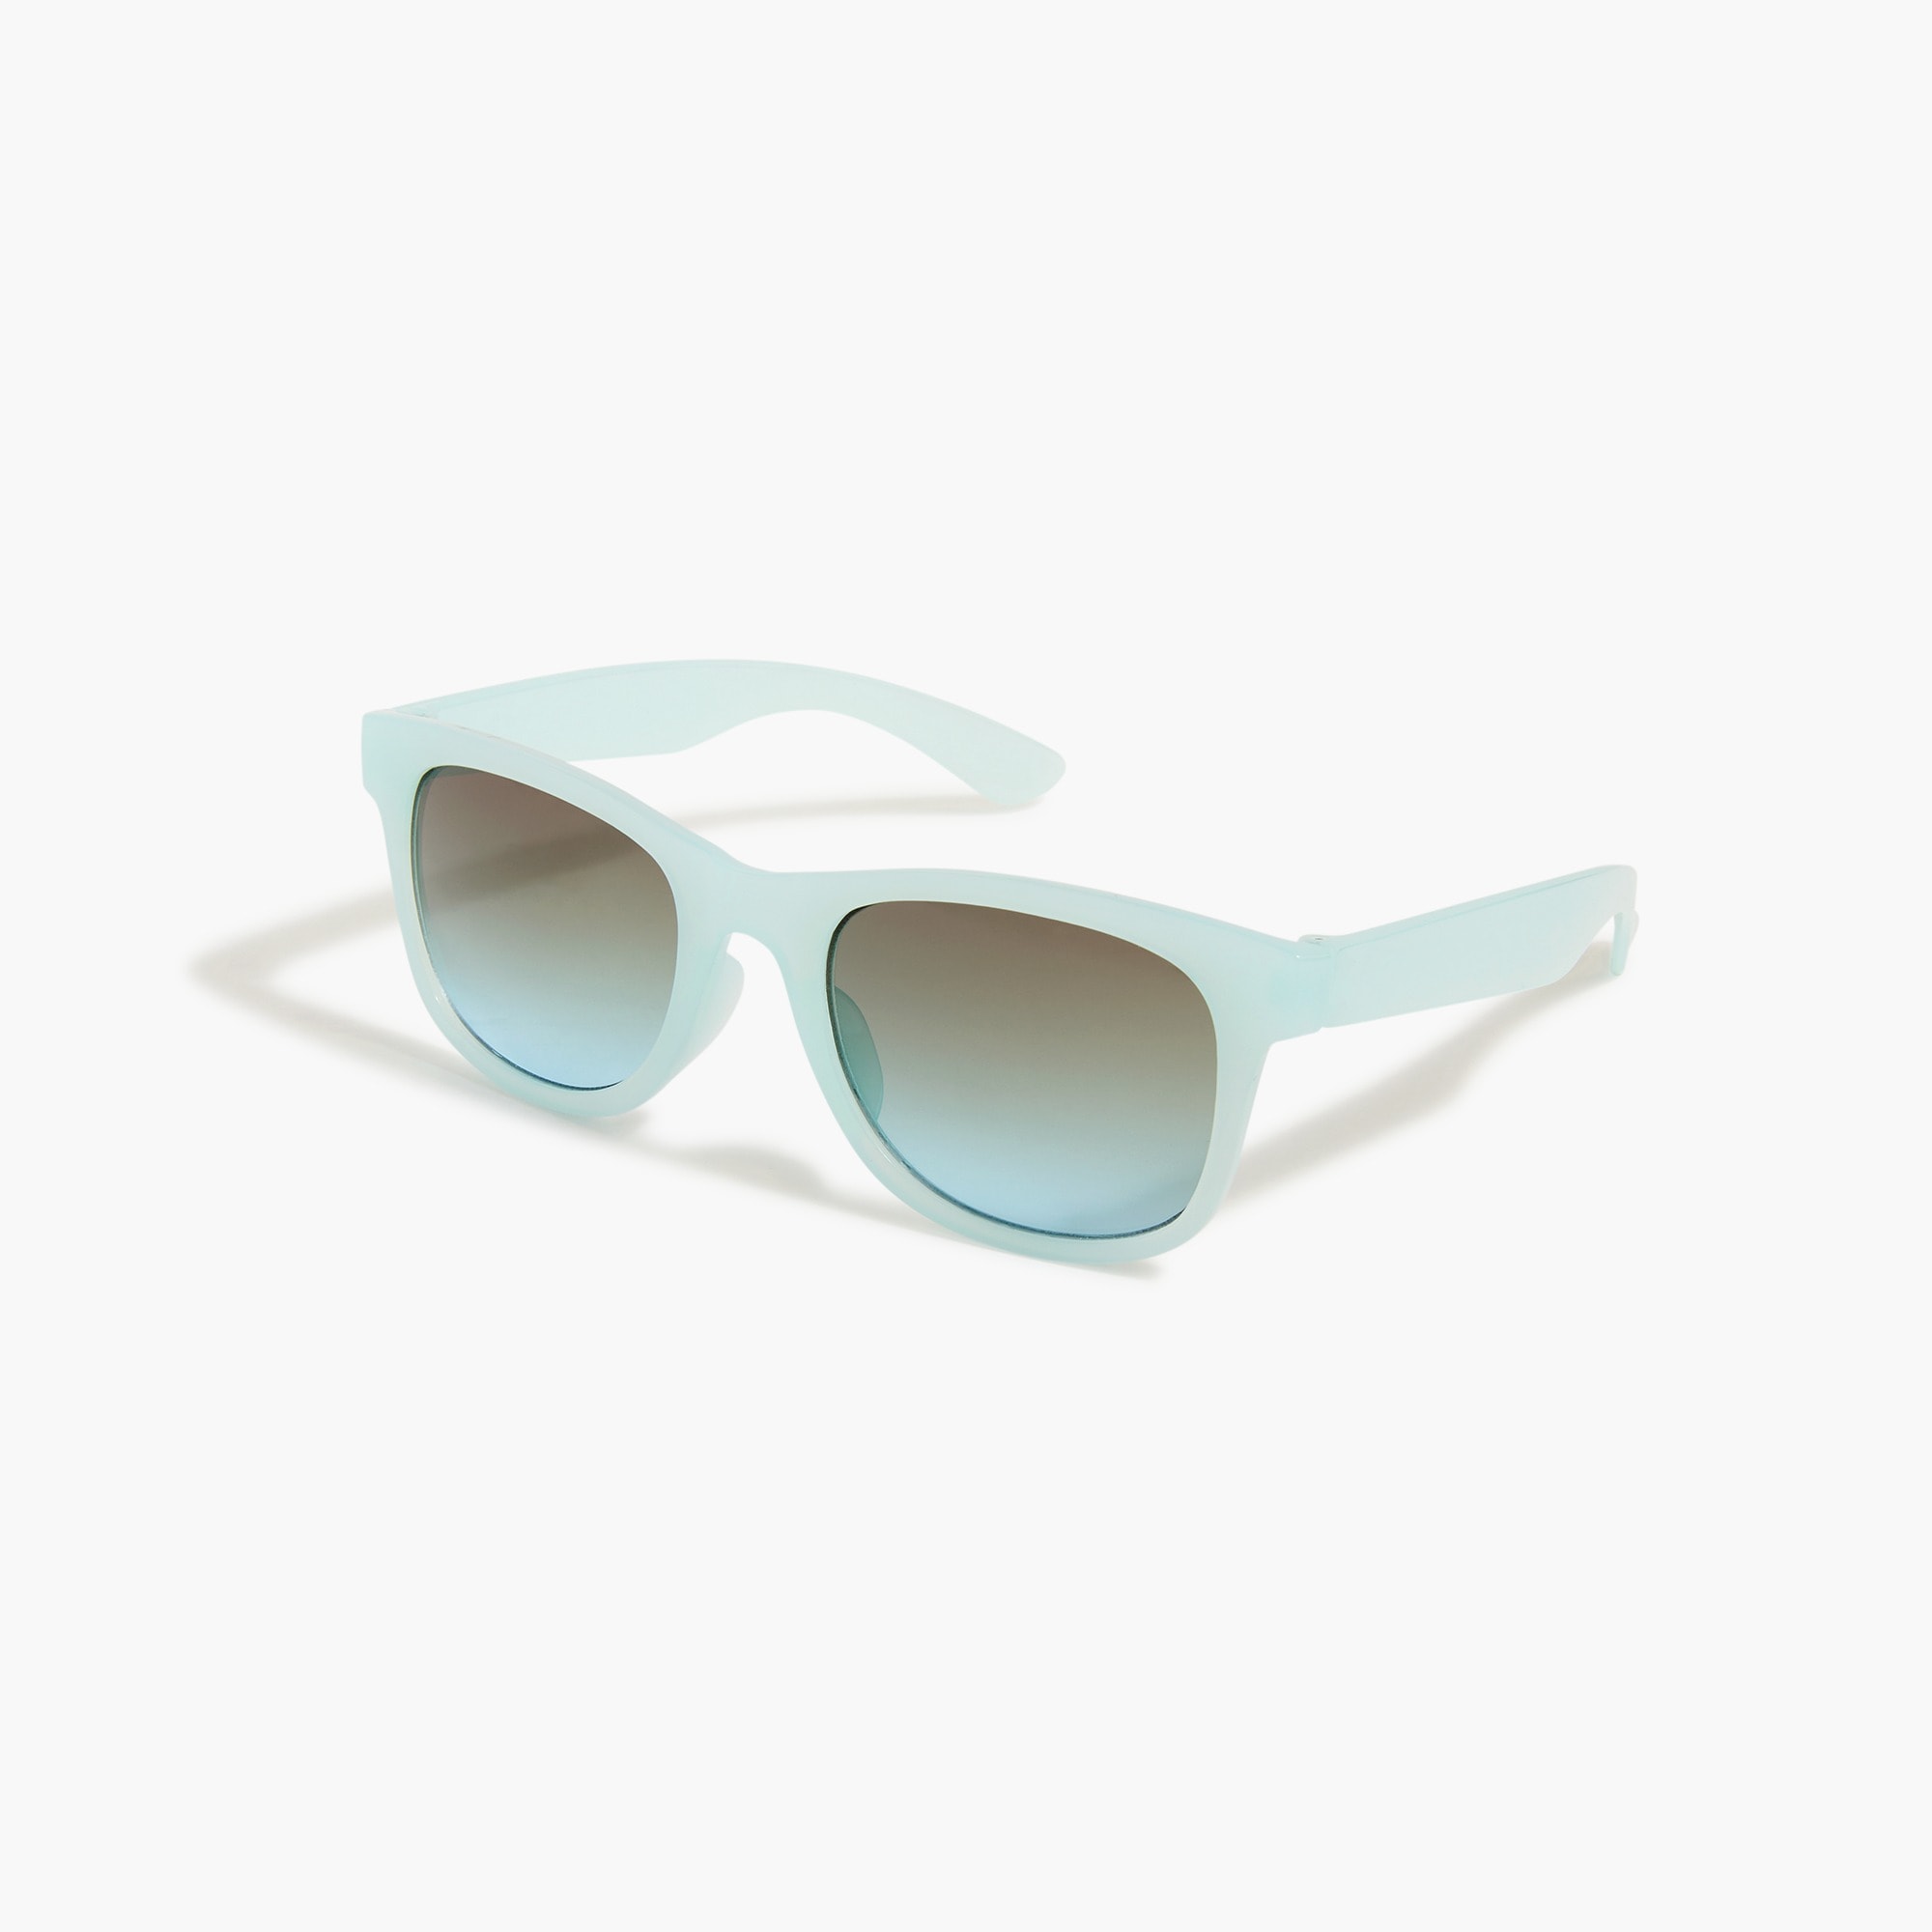 Girls' classic sunglasses